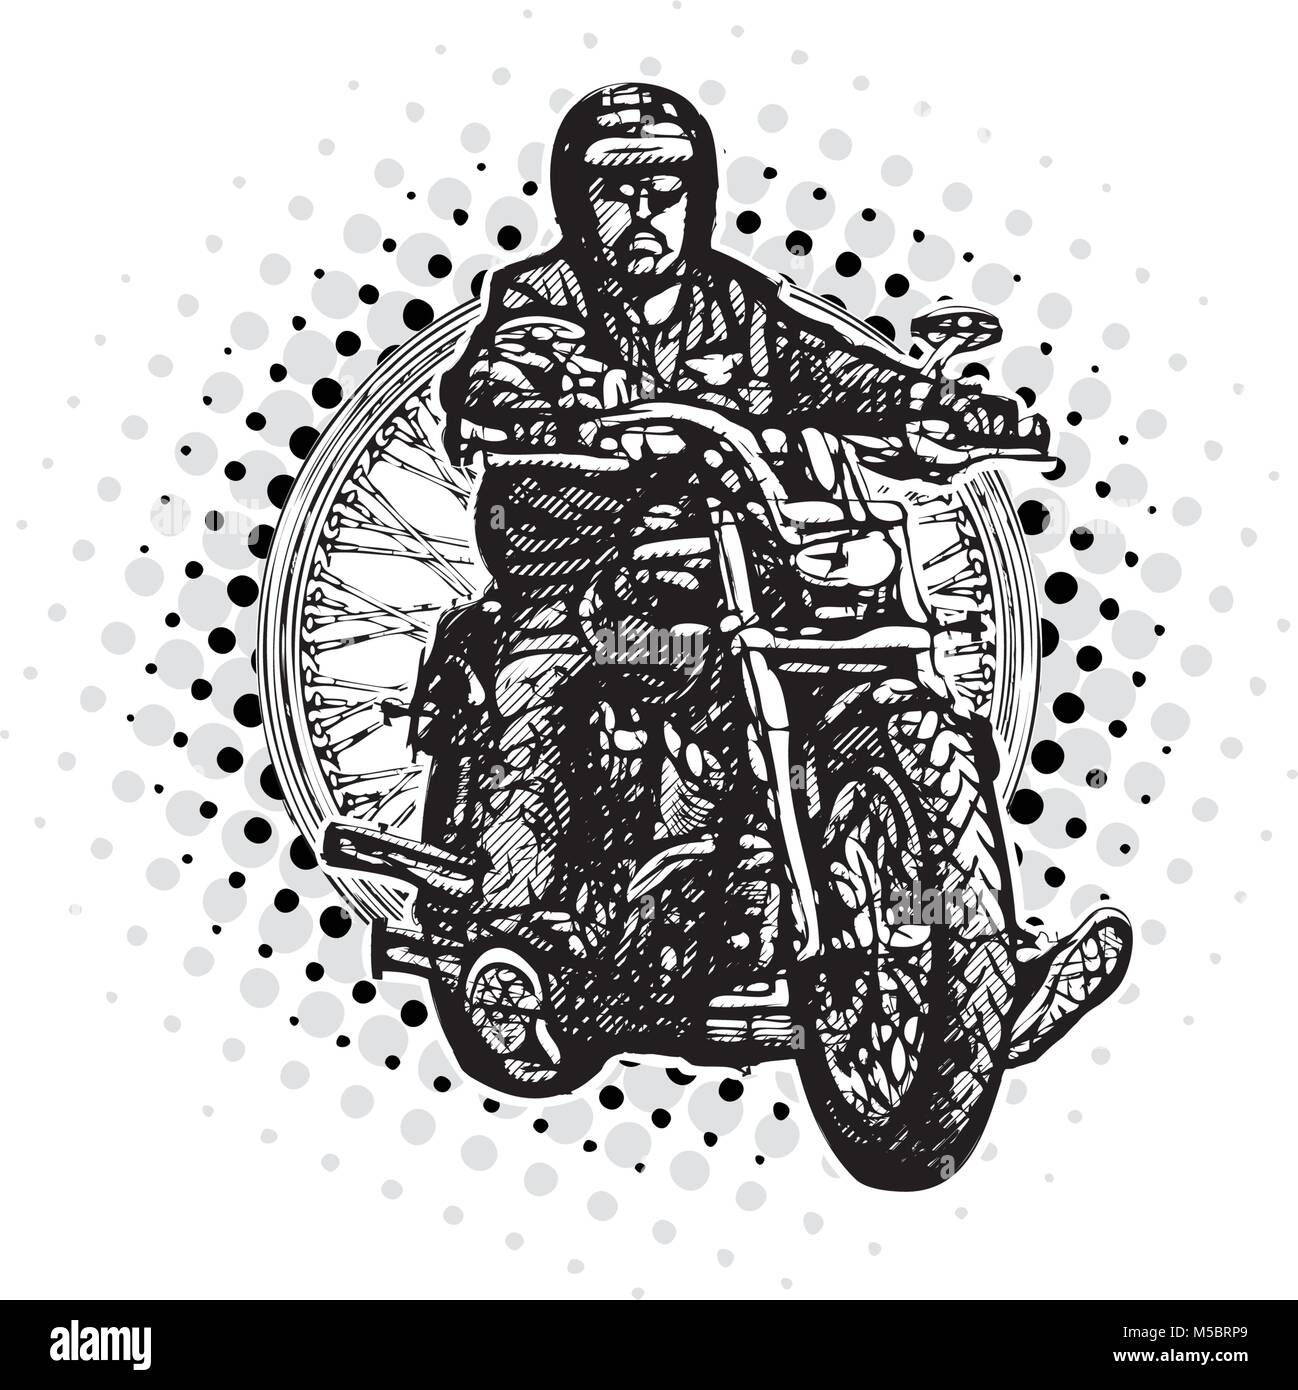 moto rider vector illustration on the wheel Stock Vector